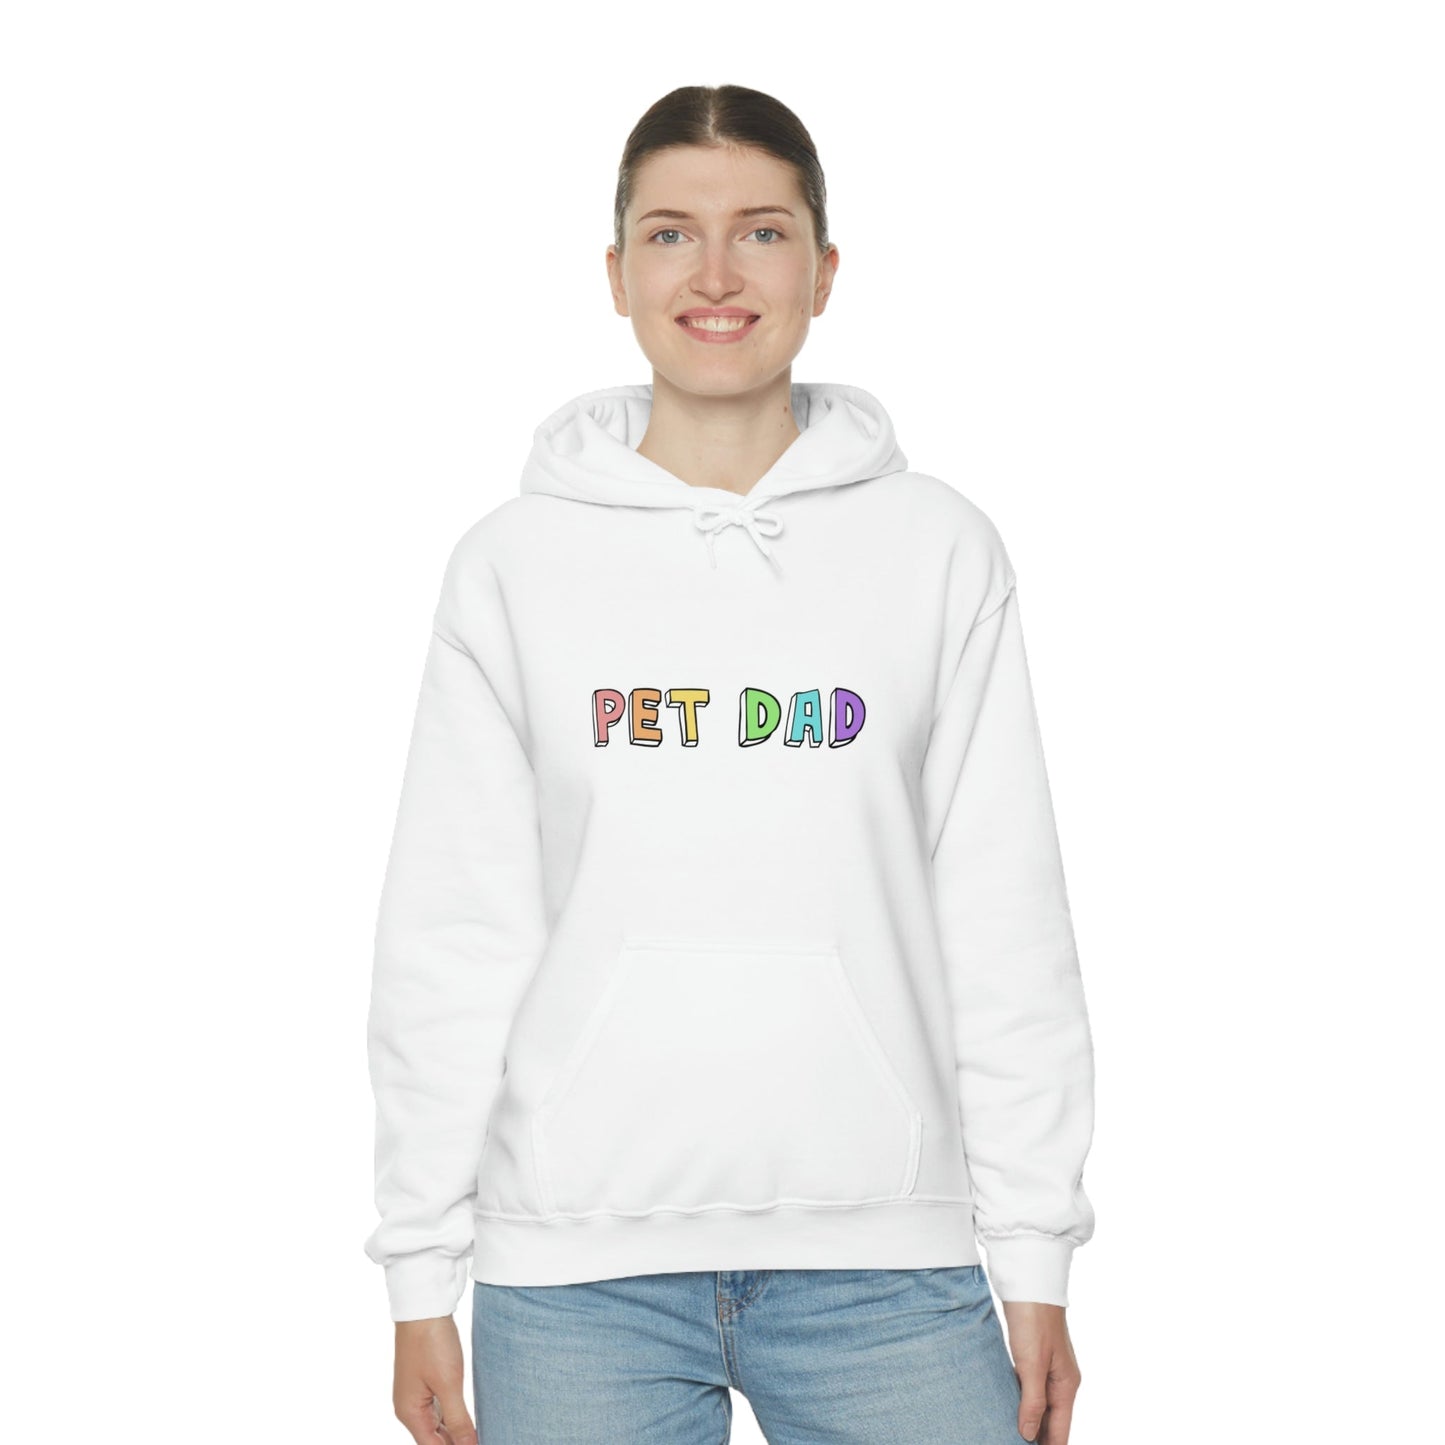 Pet Dad | Hooded Sweatshirt - Detezi Designs-21398668842688341296